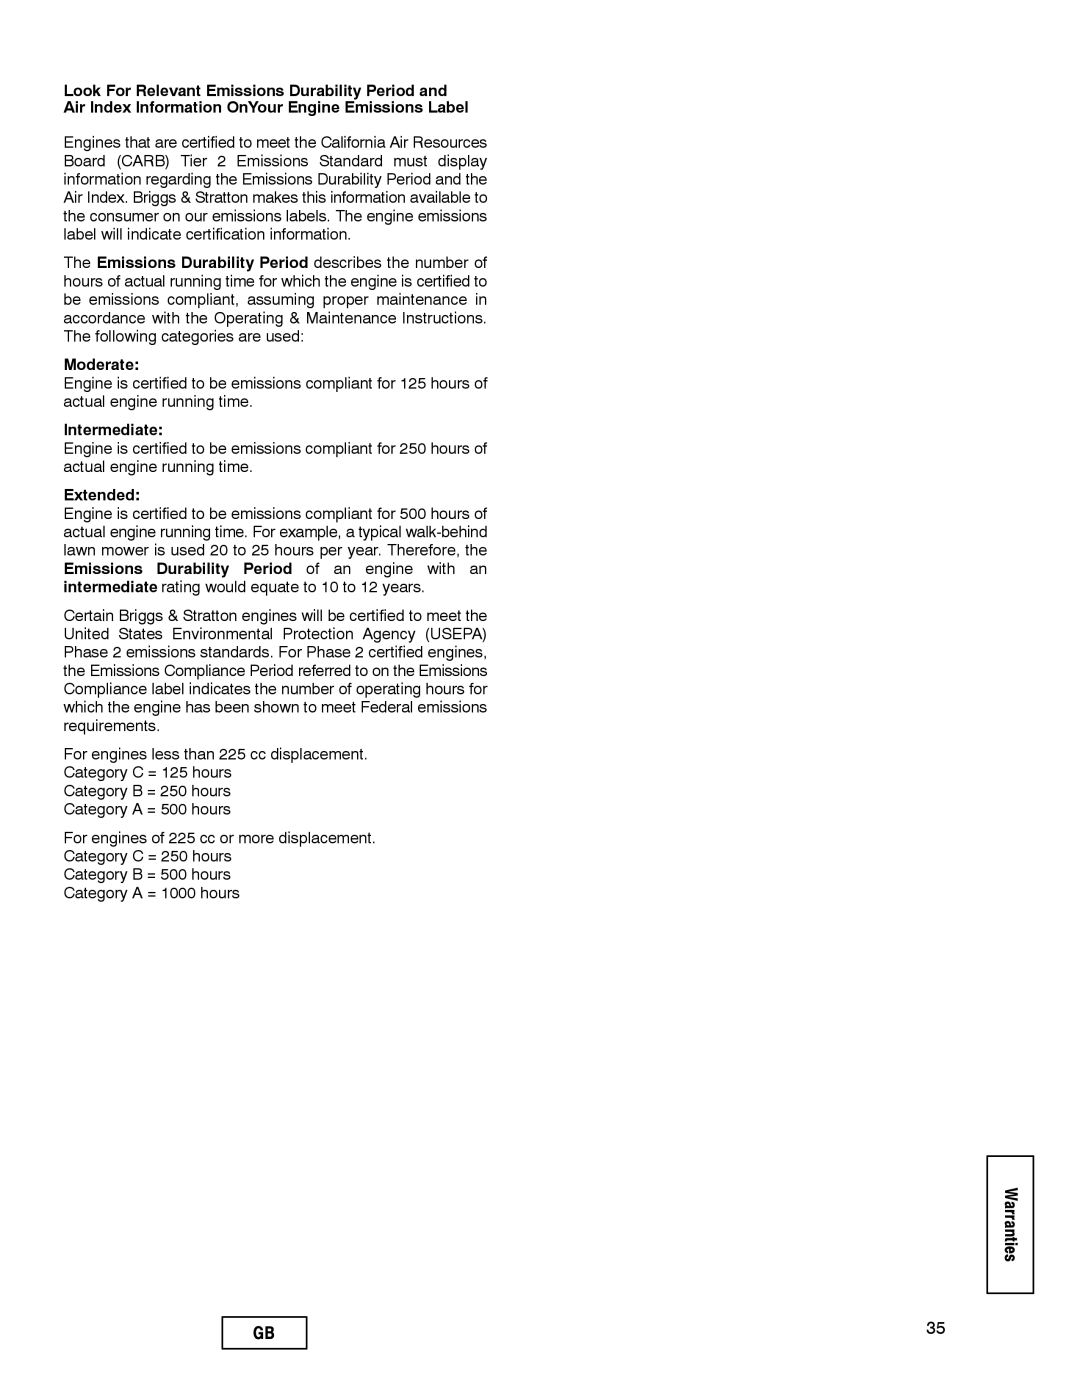 Husqvarna LE389 manual Warranties, Moderate, Intermediate, Extended 